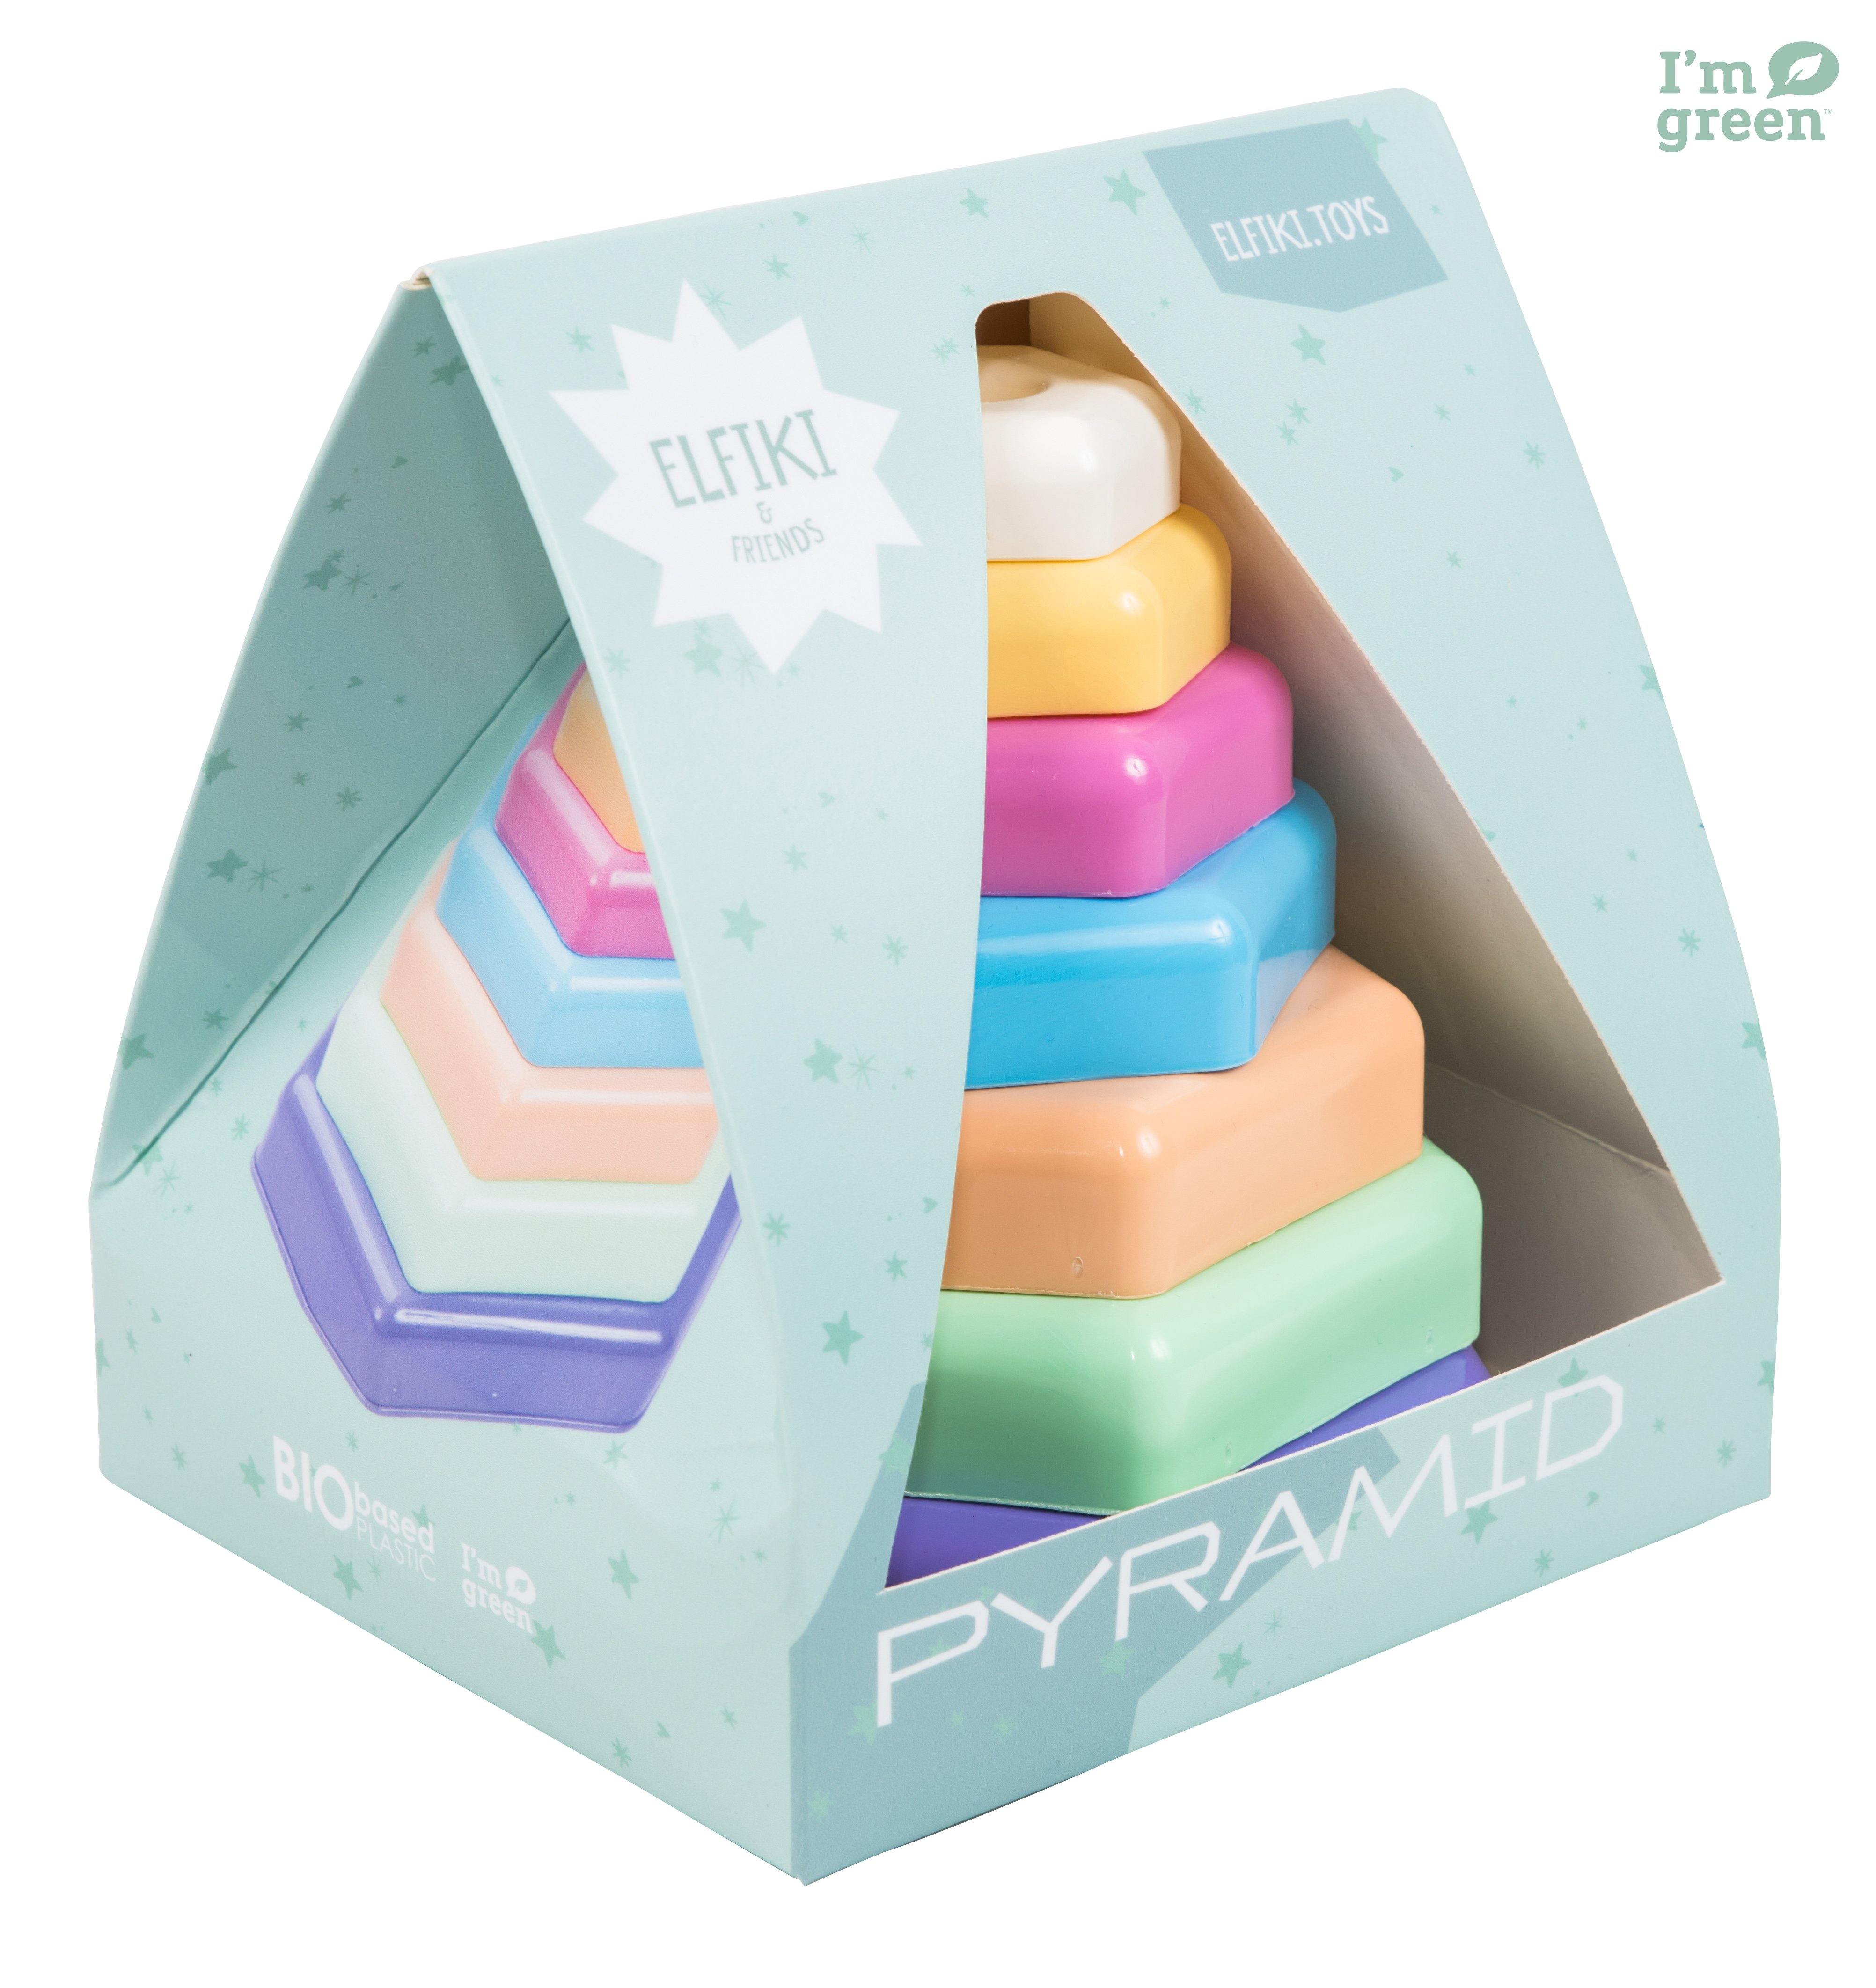 Bio plastic - Toy pyramid educational toy - T&M Toys